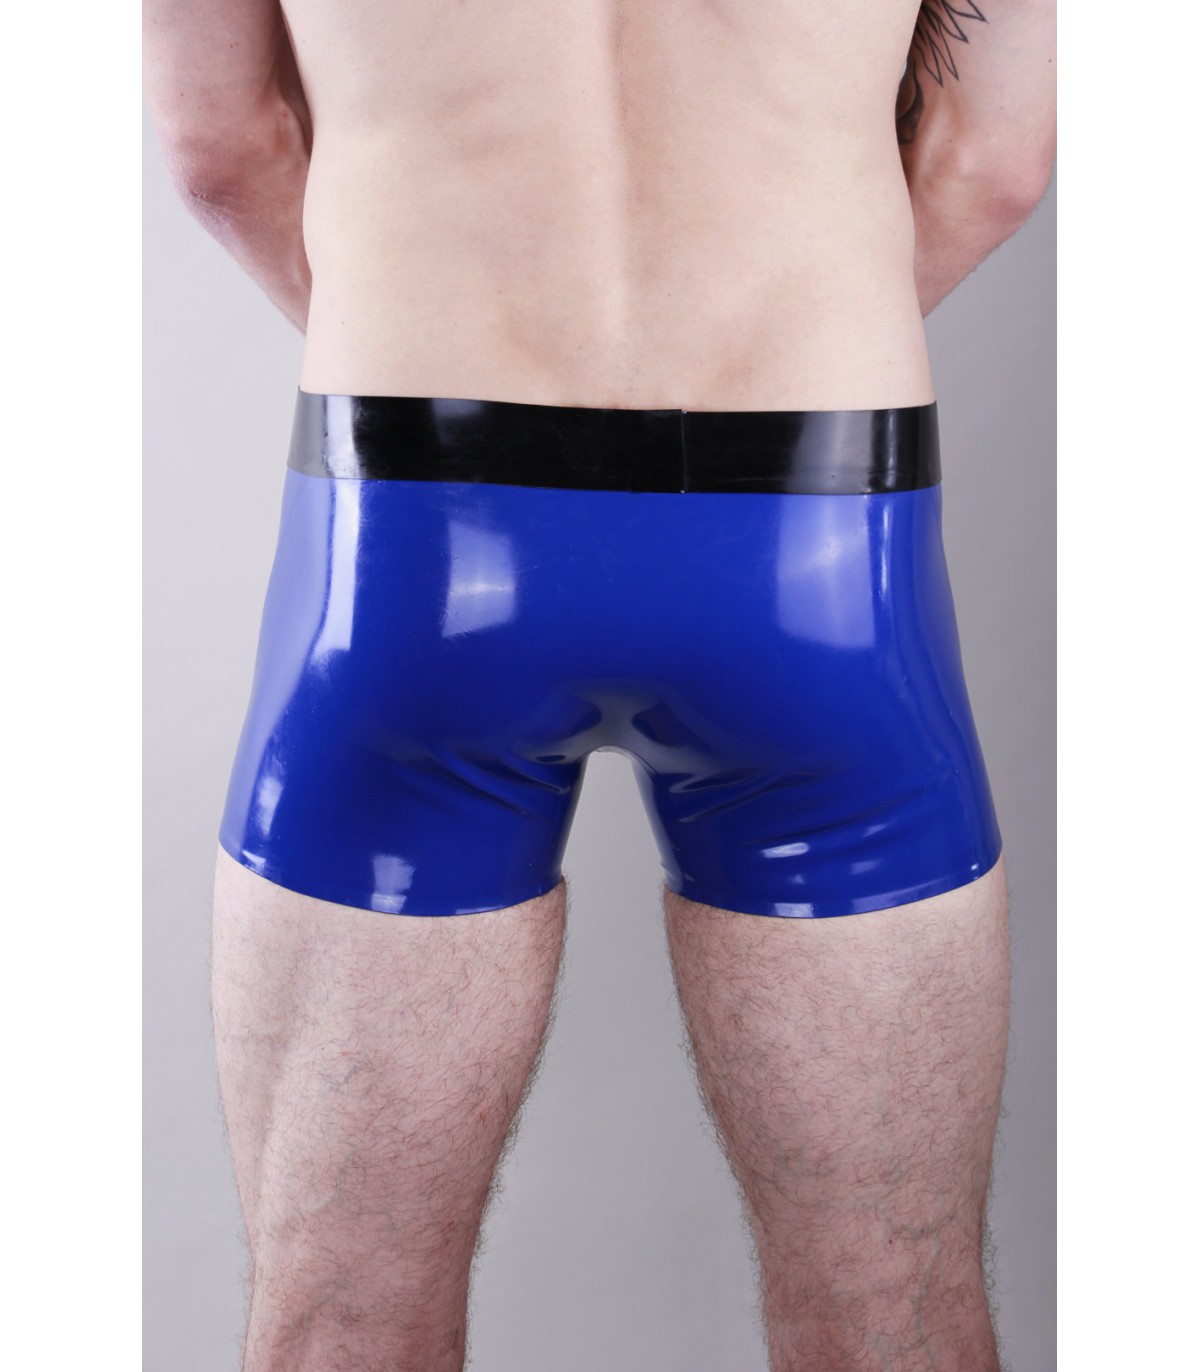 EXLATEX Latex Panties Briefs with Tube Rubber Underwear Shorts